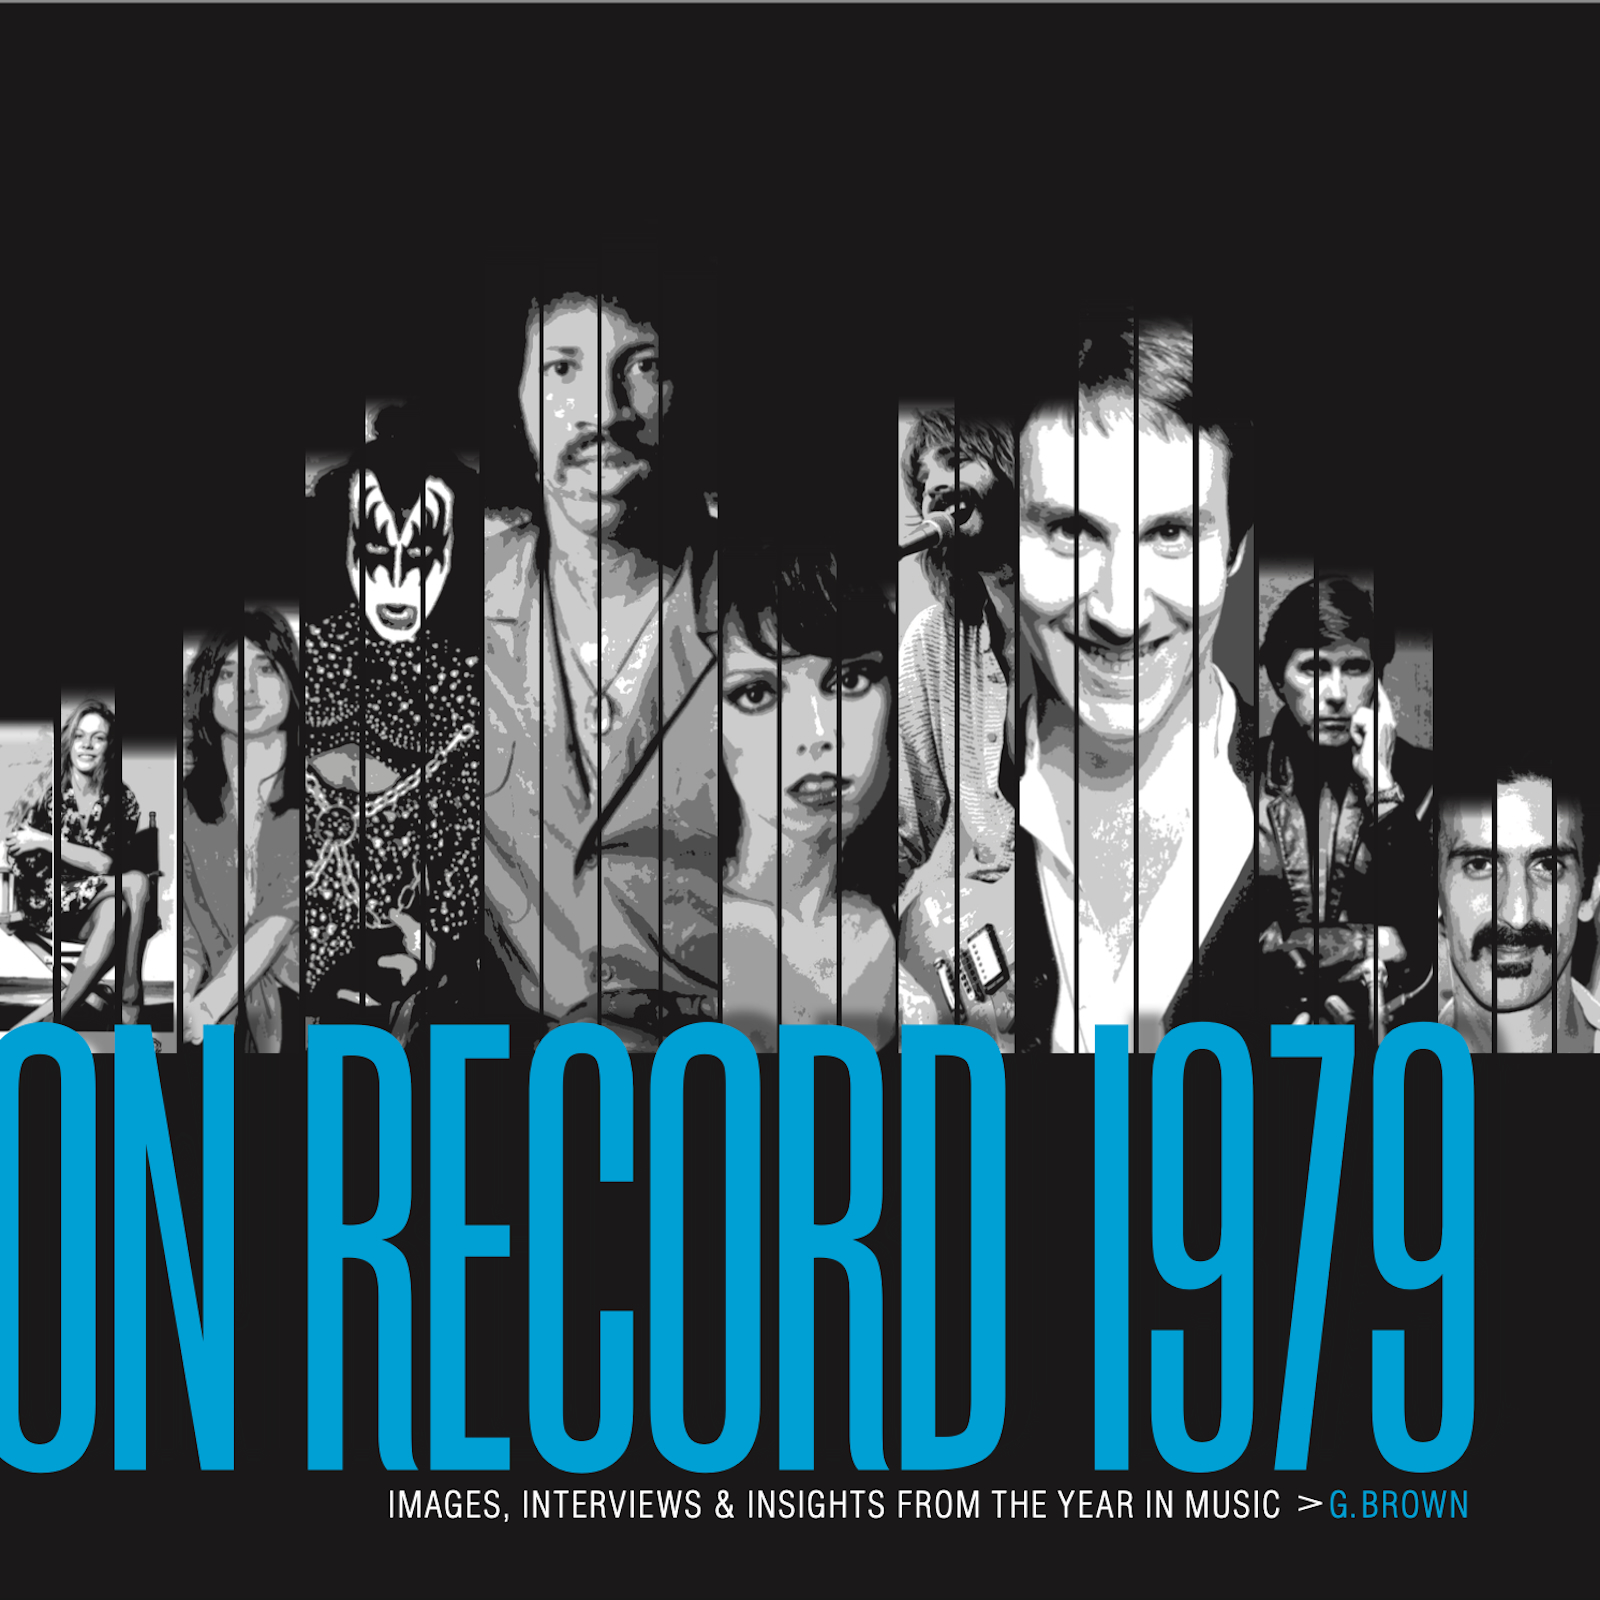 On Record 1979 Vol. 7